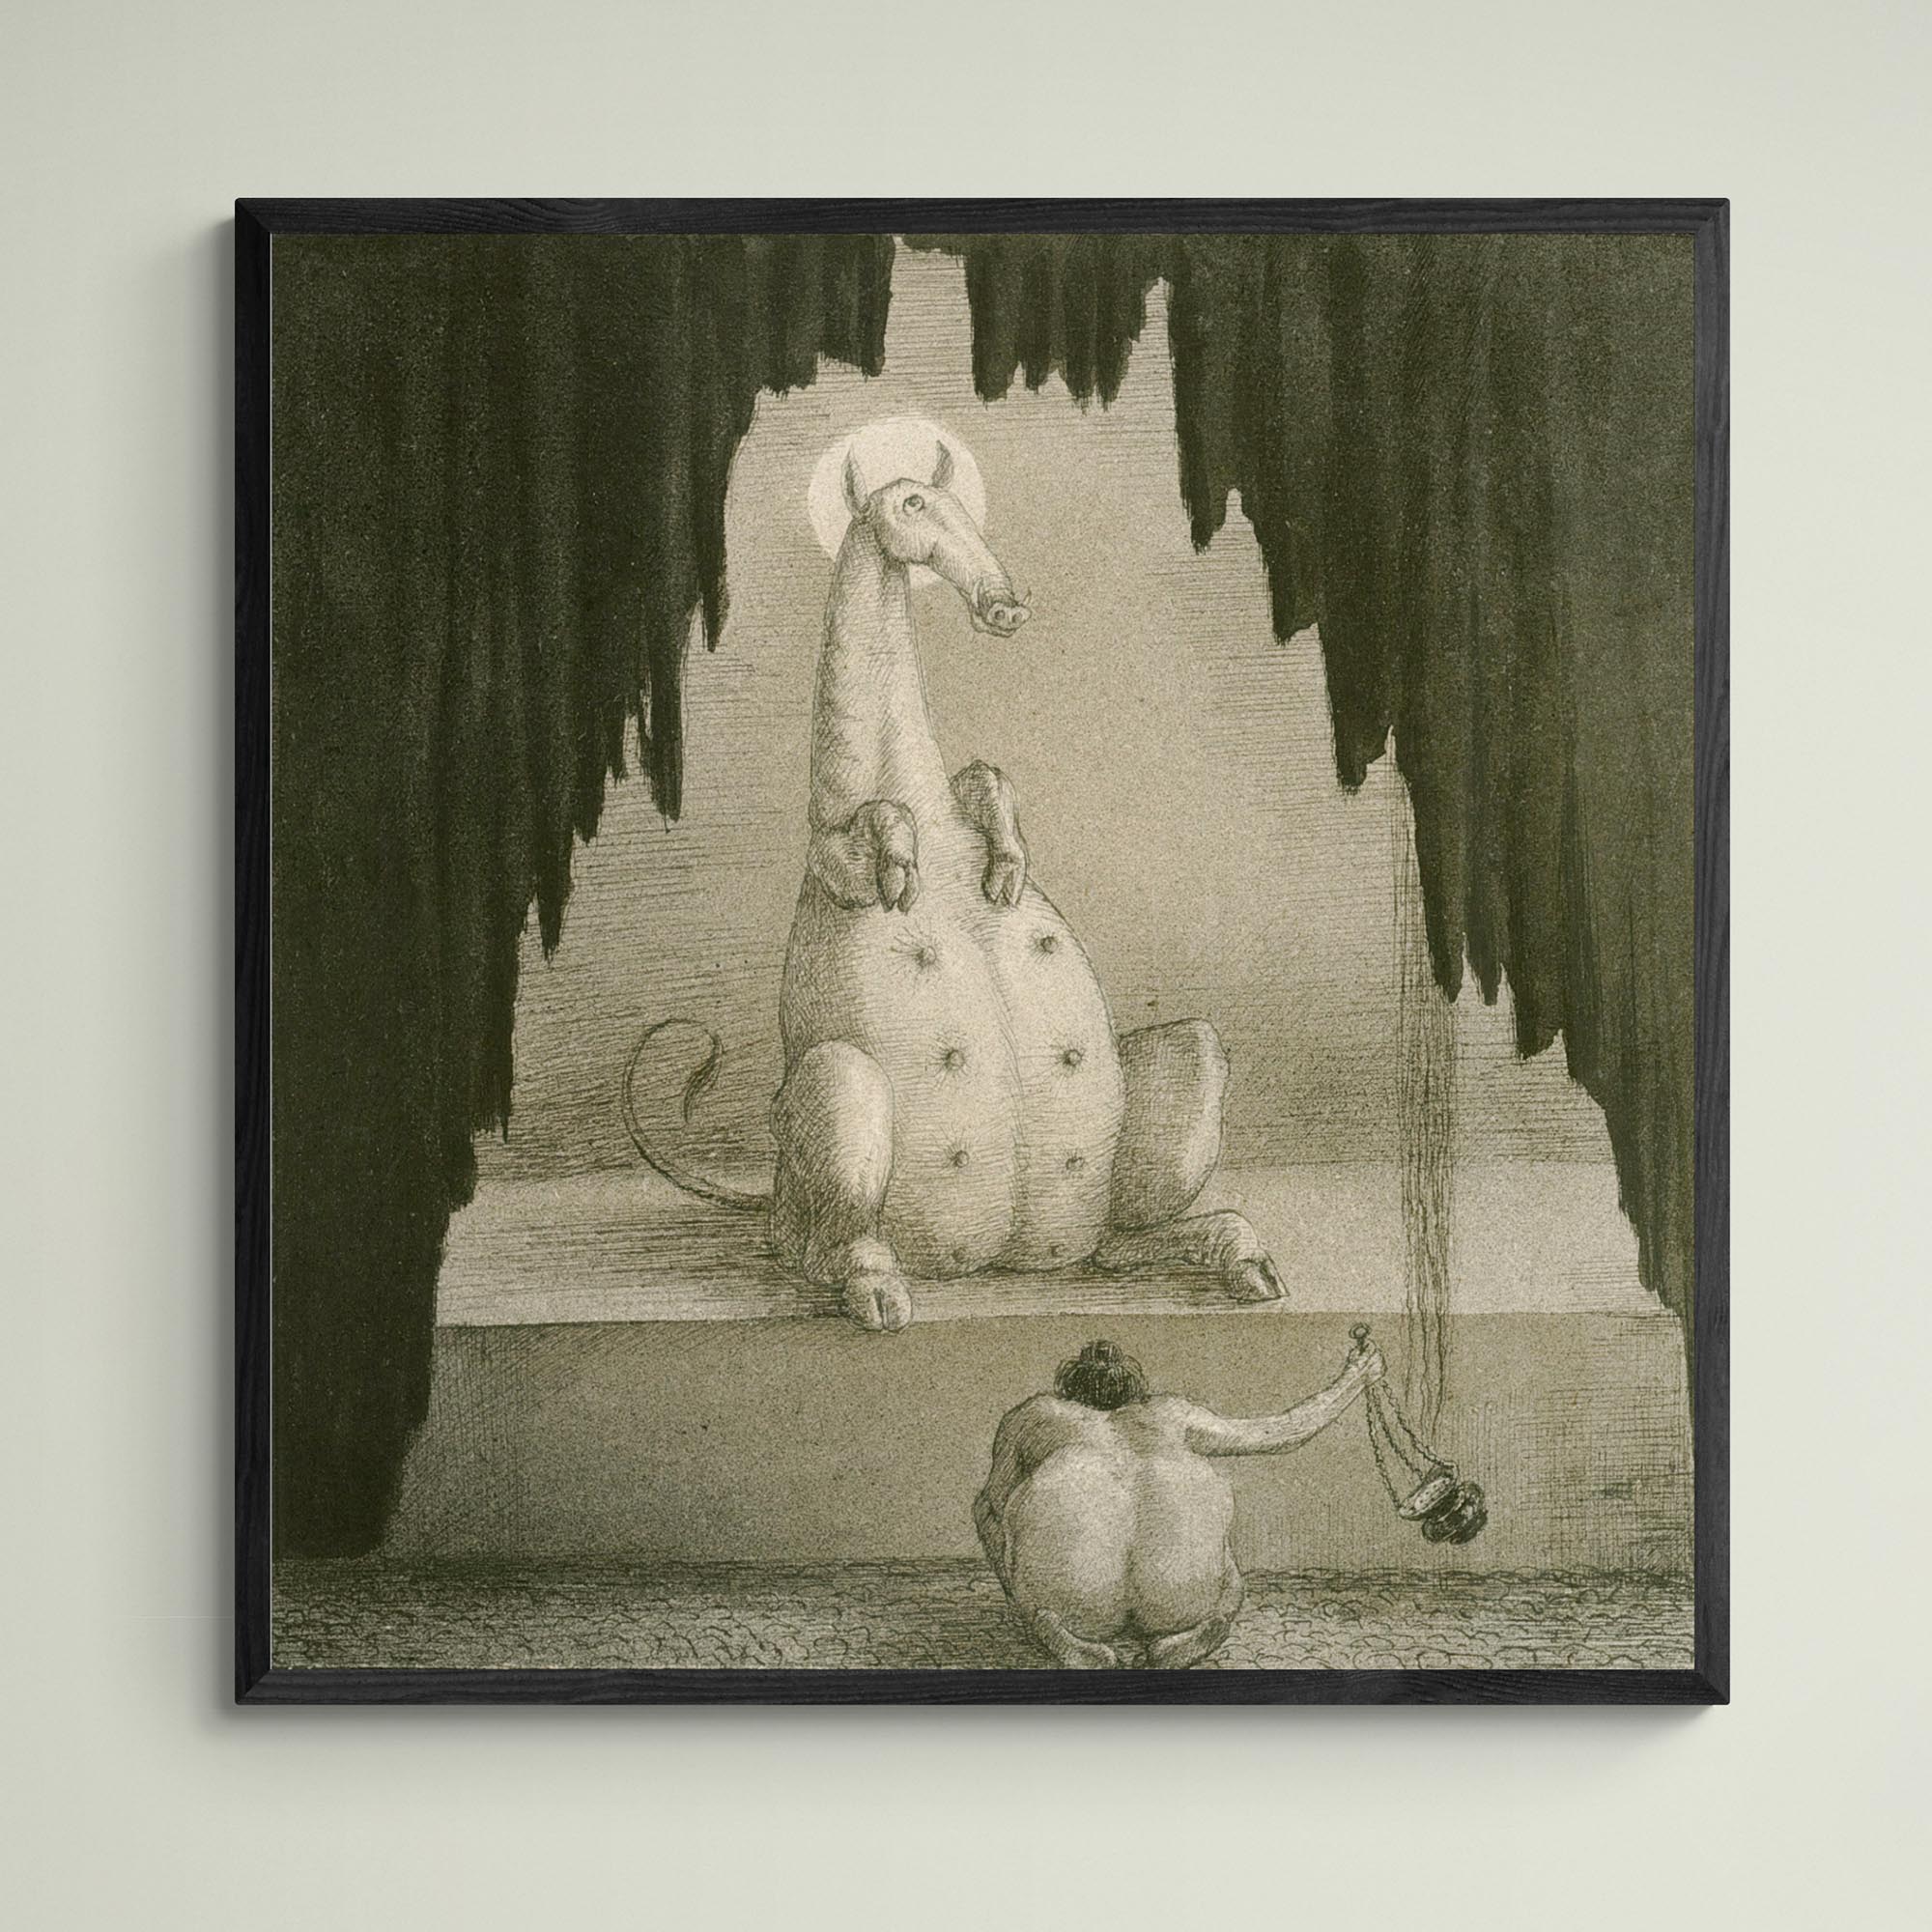 giclee 6"x6" Alfred Kubin, Adoration, 1900 Symbolist Expressionism Occult Surreal Dark Worship | Wiccan Pagan Supernatural Gothic Giclée Fine Art Print